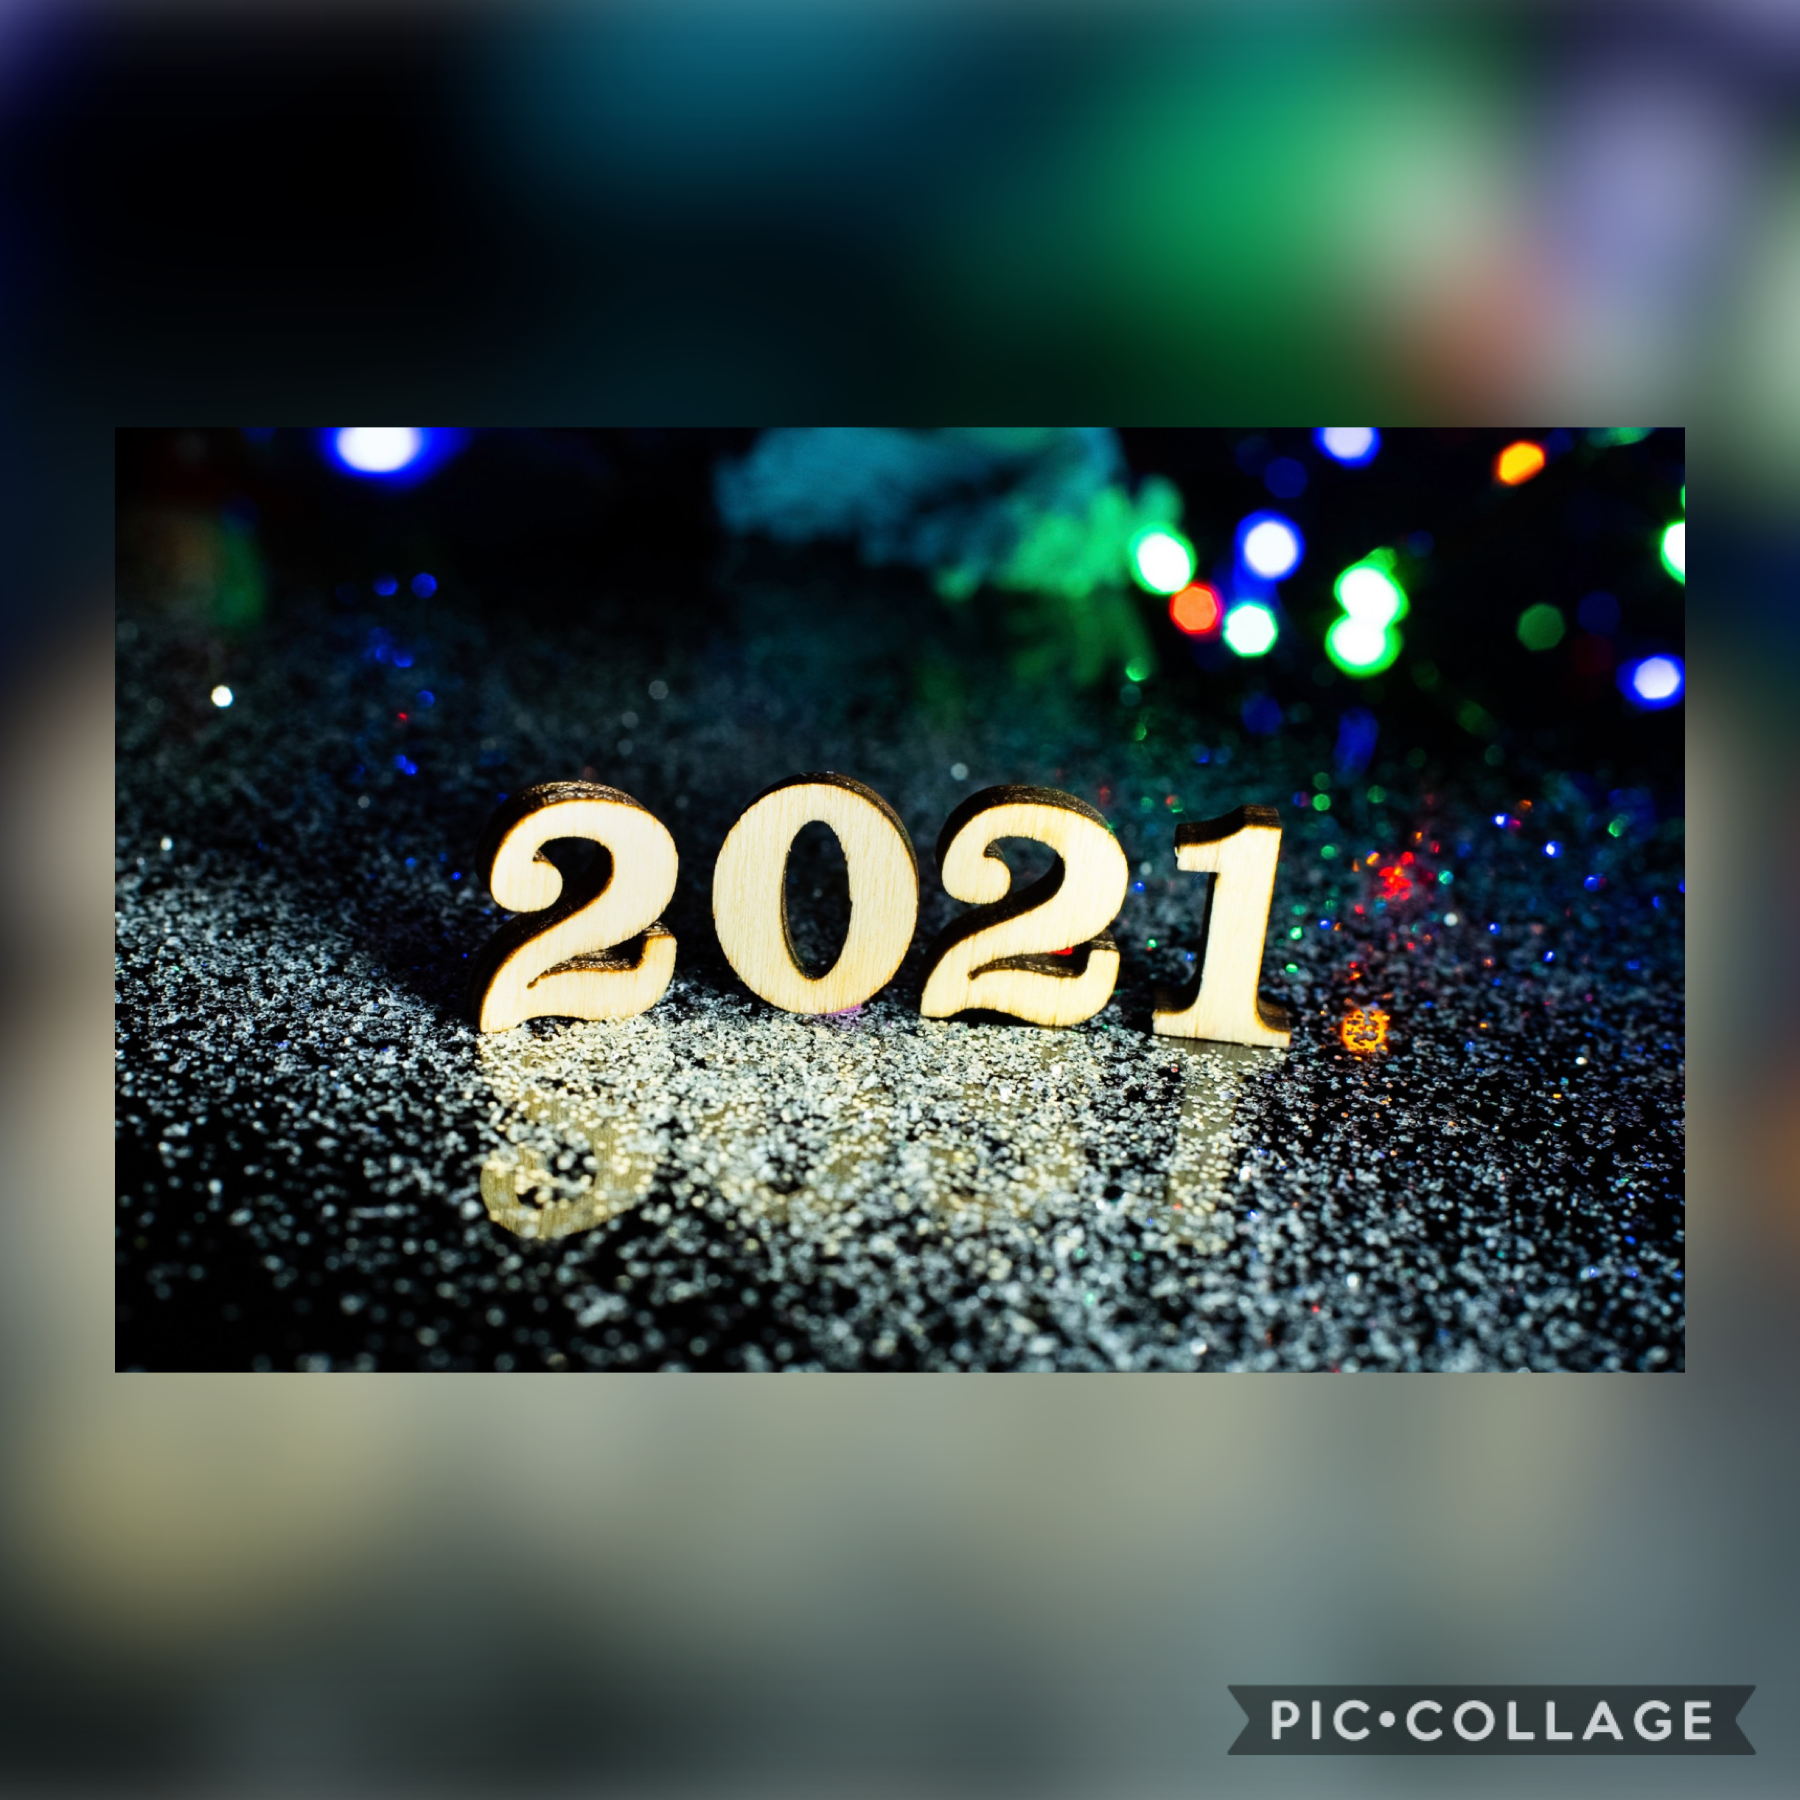 Come sooner 2021